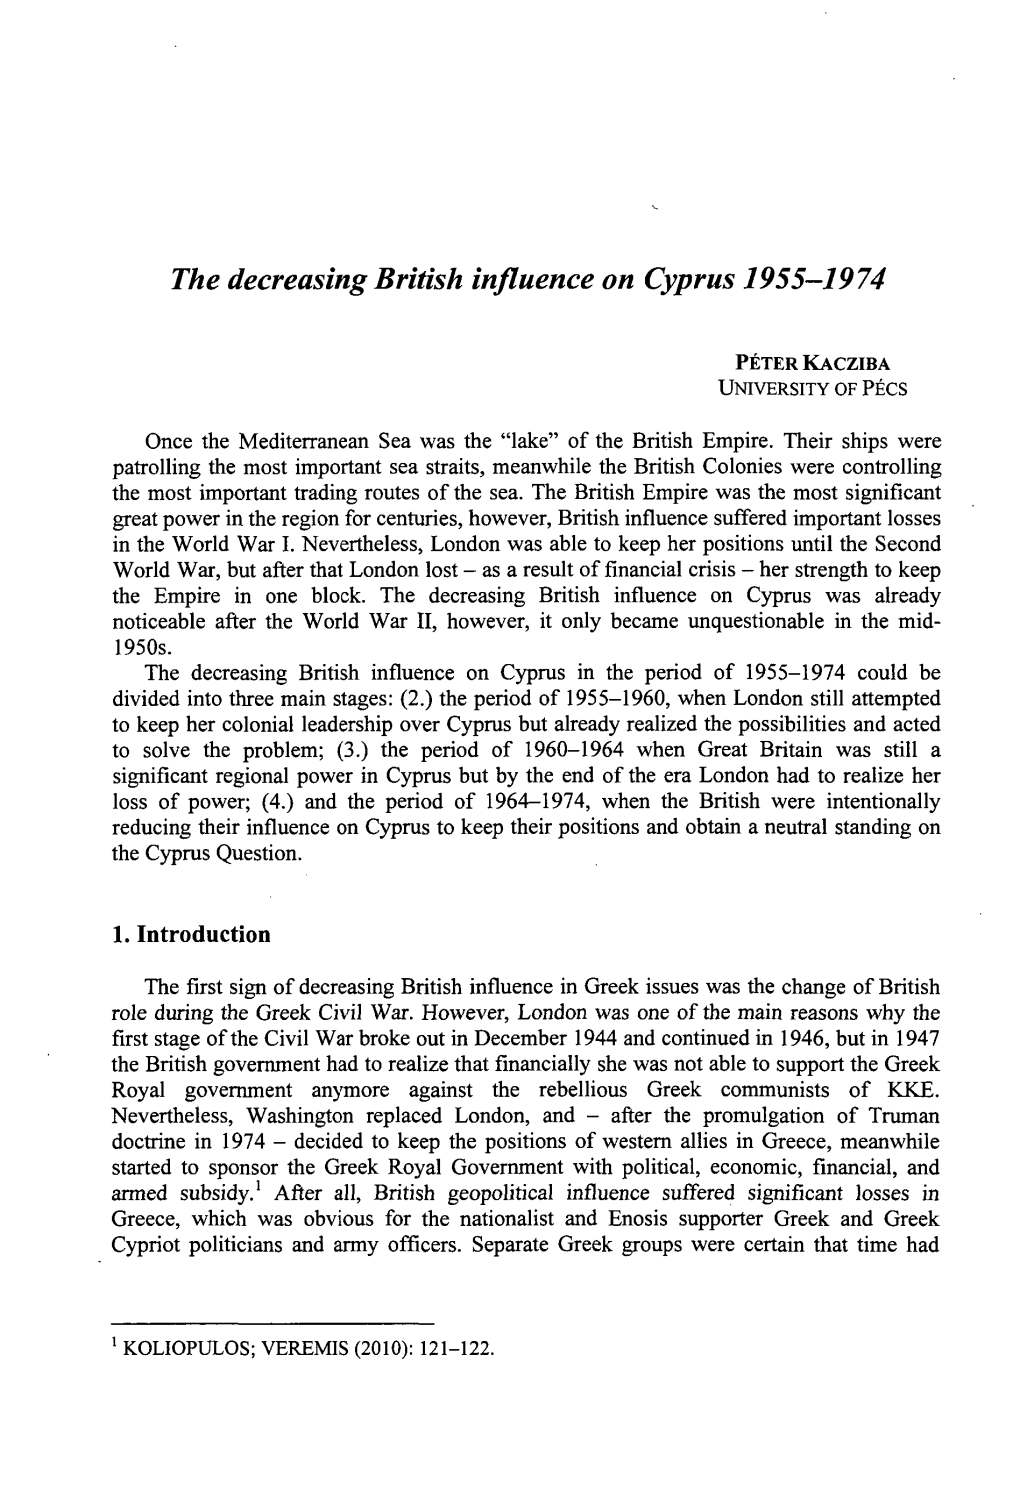 The Decreasing British Influence on Cyprus 1955-1974